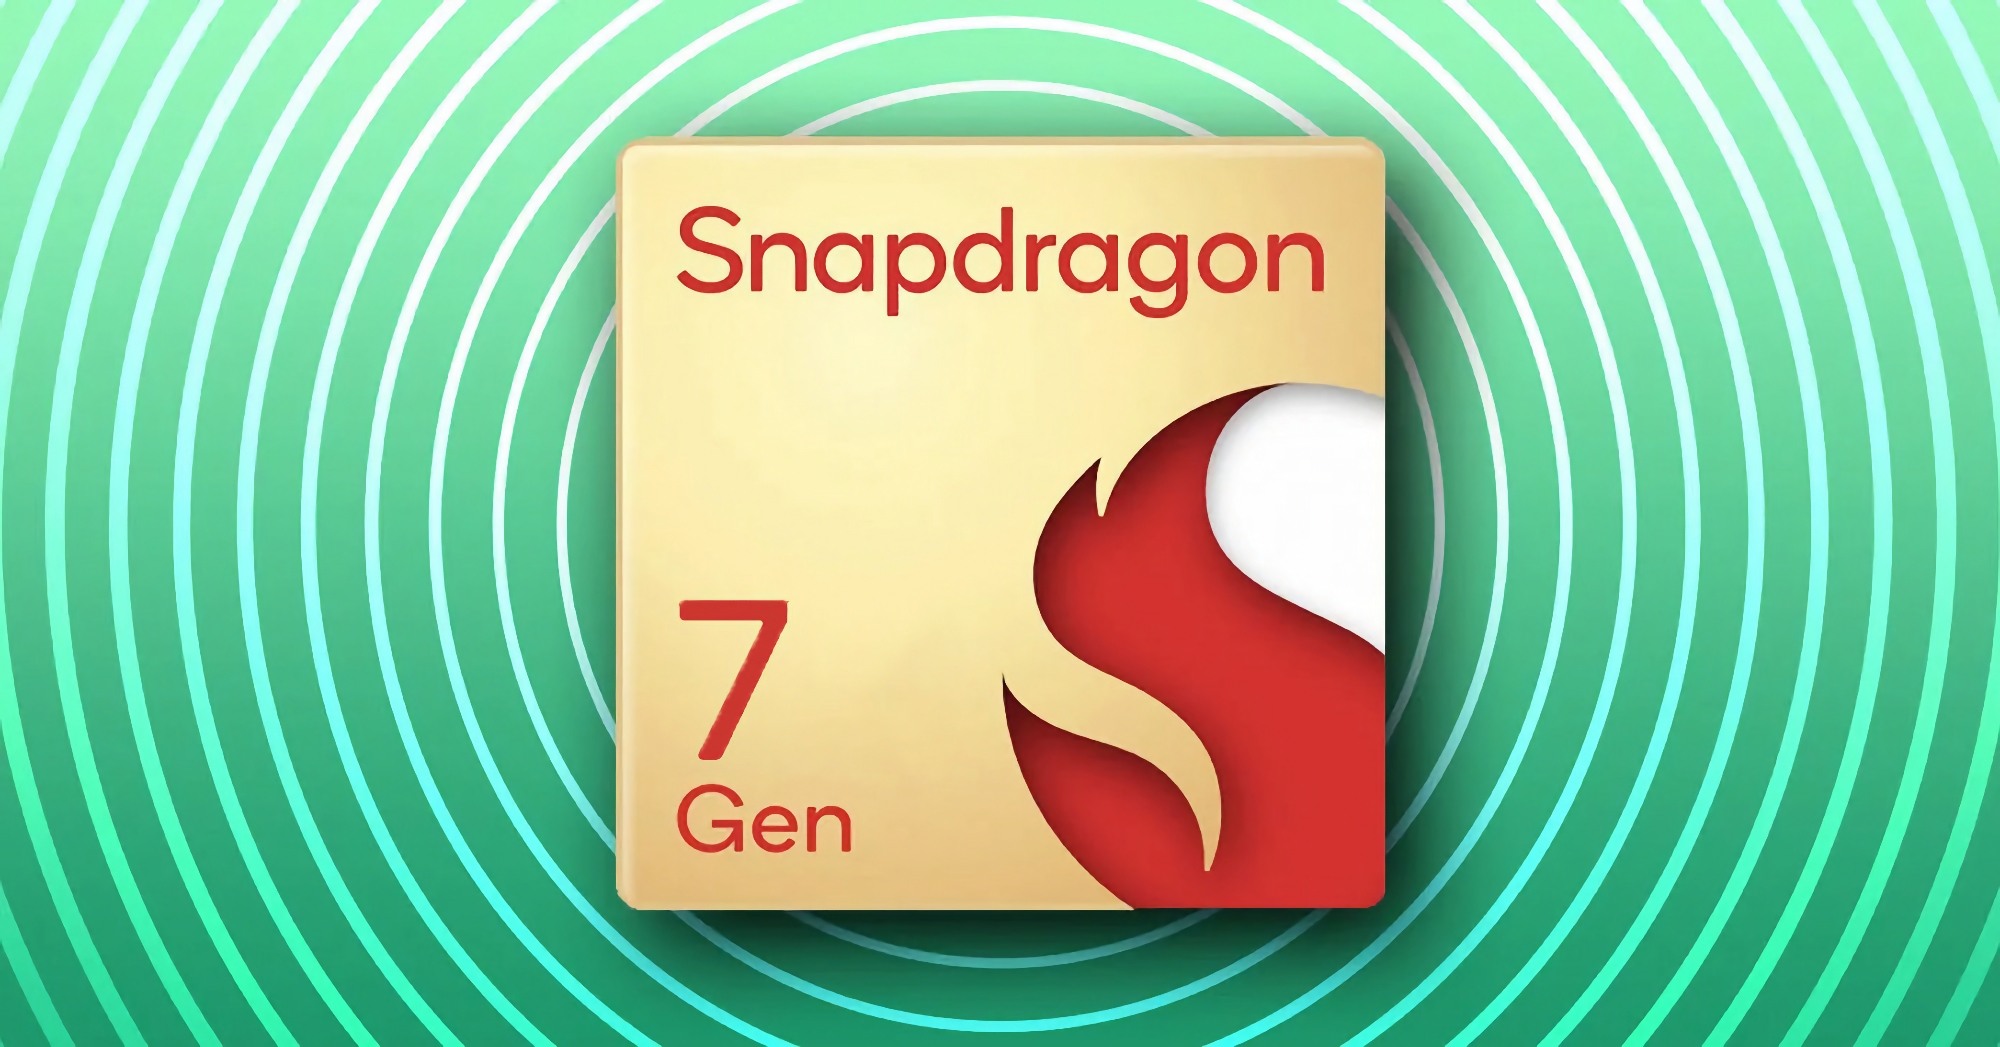 Snapdragon 7 gen телефоны. Процессор Snapdragon 8 Gen 1. Qualcomm Snapdragon 7 Gen 1. Снапдрагон 7 ген 2. Qualcomm Snapdragon 7+ Gen 2.